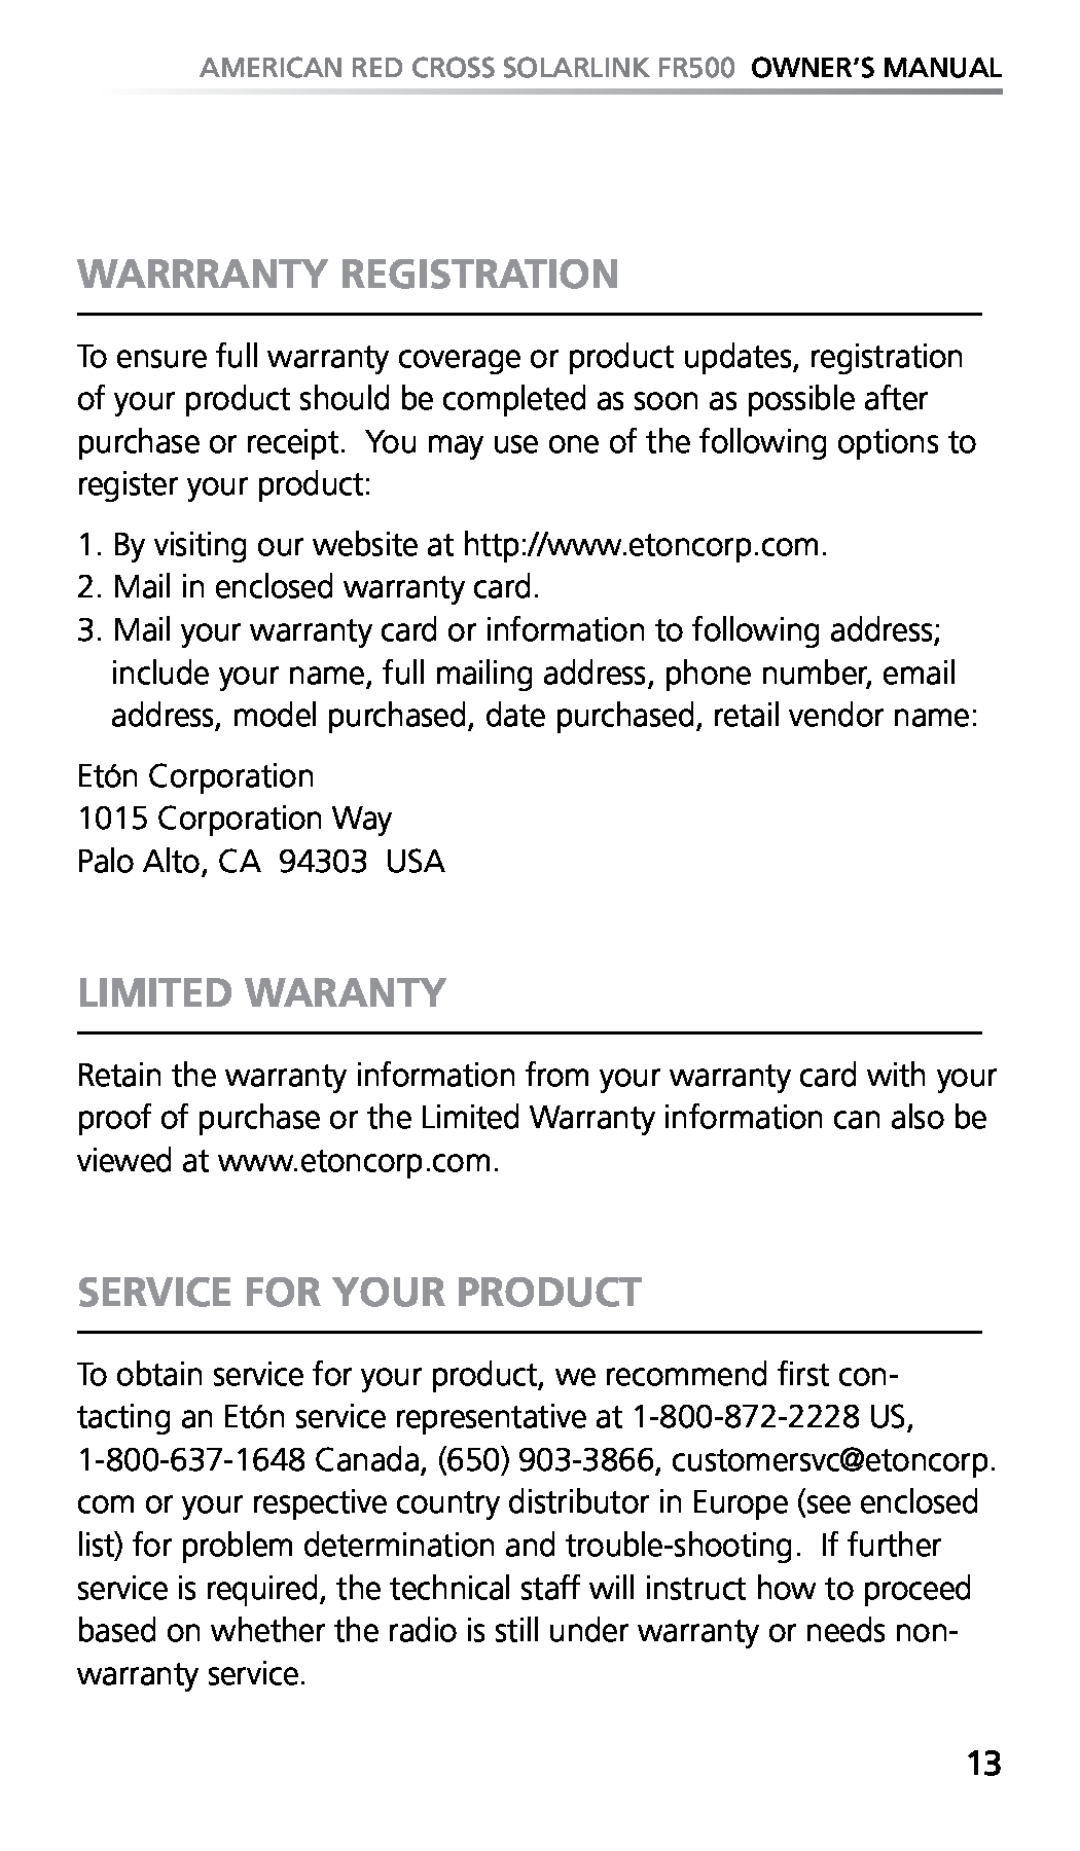 Eton FR500 owner manual Warrranty Registration, Limited Waranty, Service For Your Product 